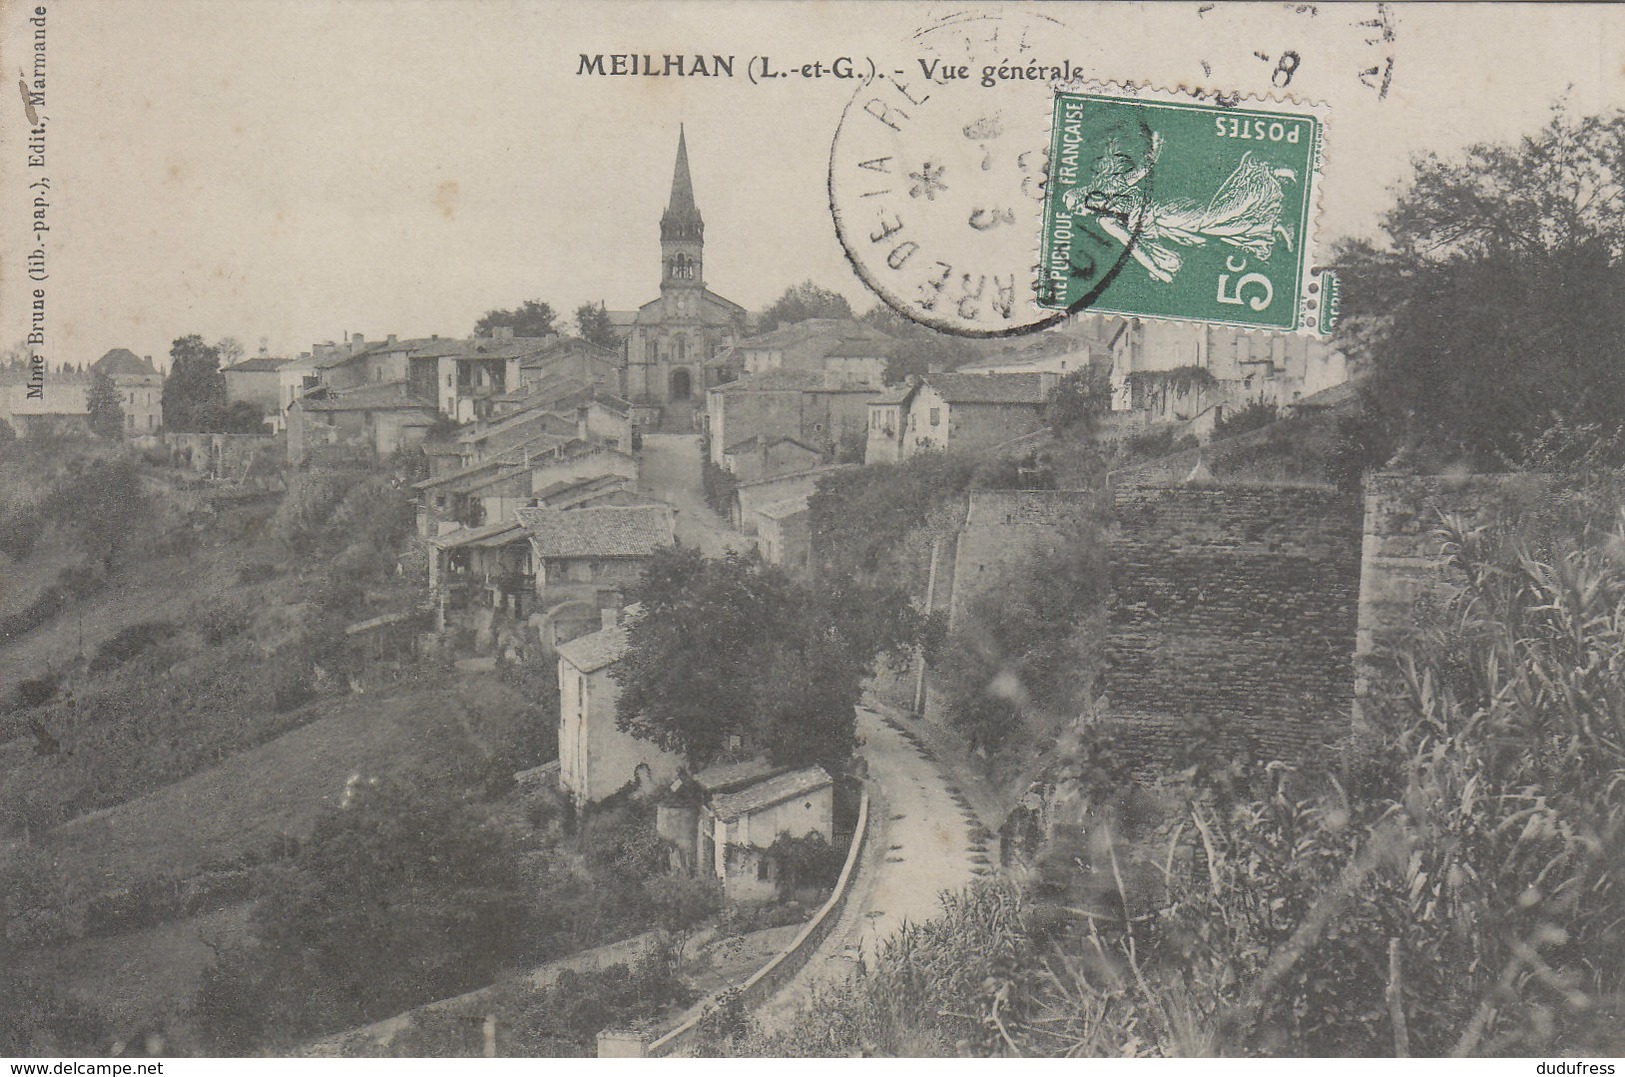 MEILHAN   VUE GENERALE - Meilhan Sur Garonne